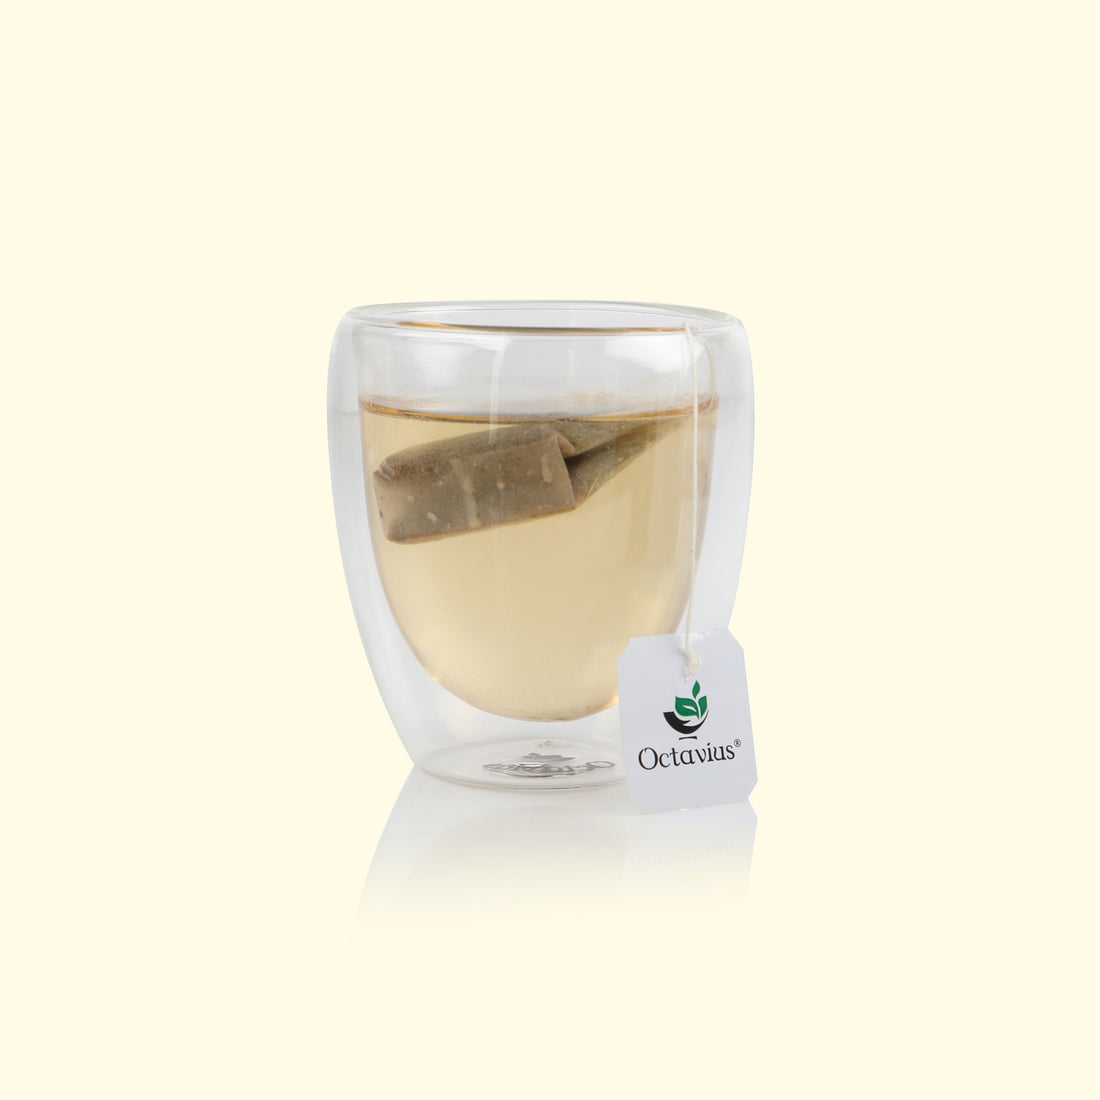 Pure Green Tea - 100 Unenveloped  Teabags (2gm Each)